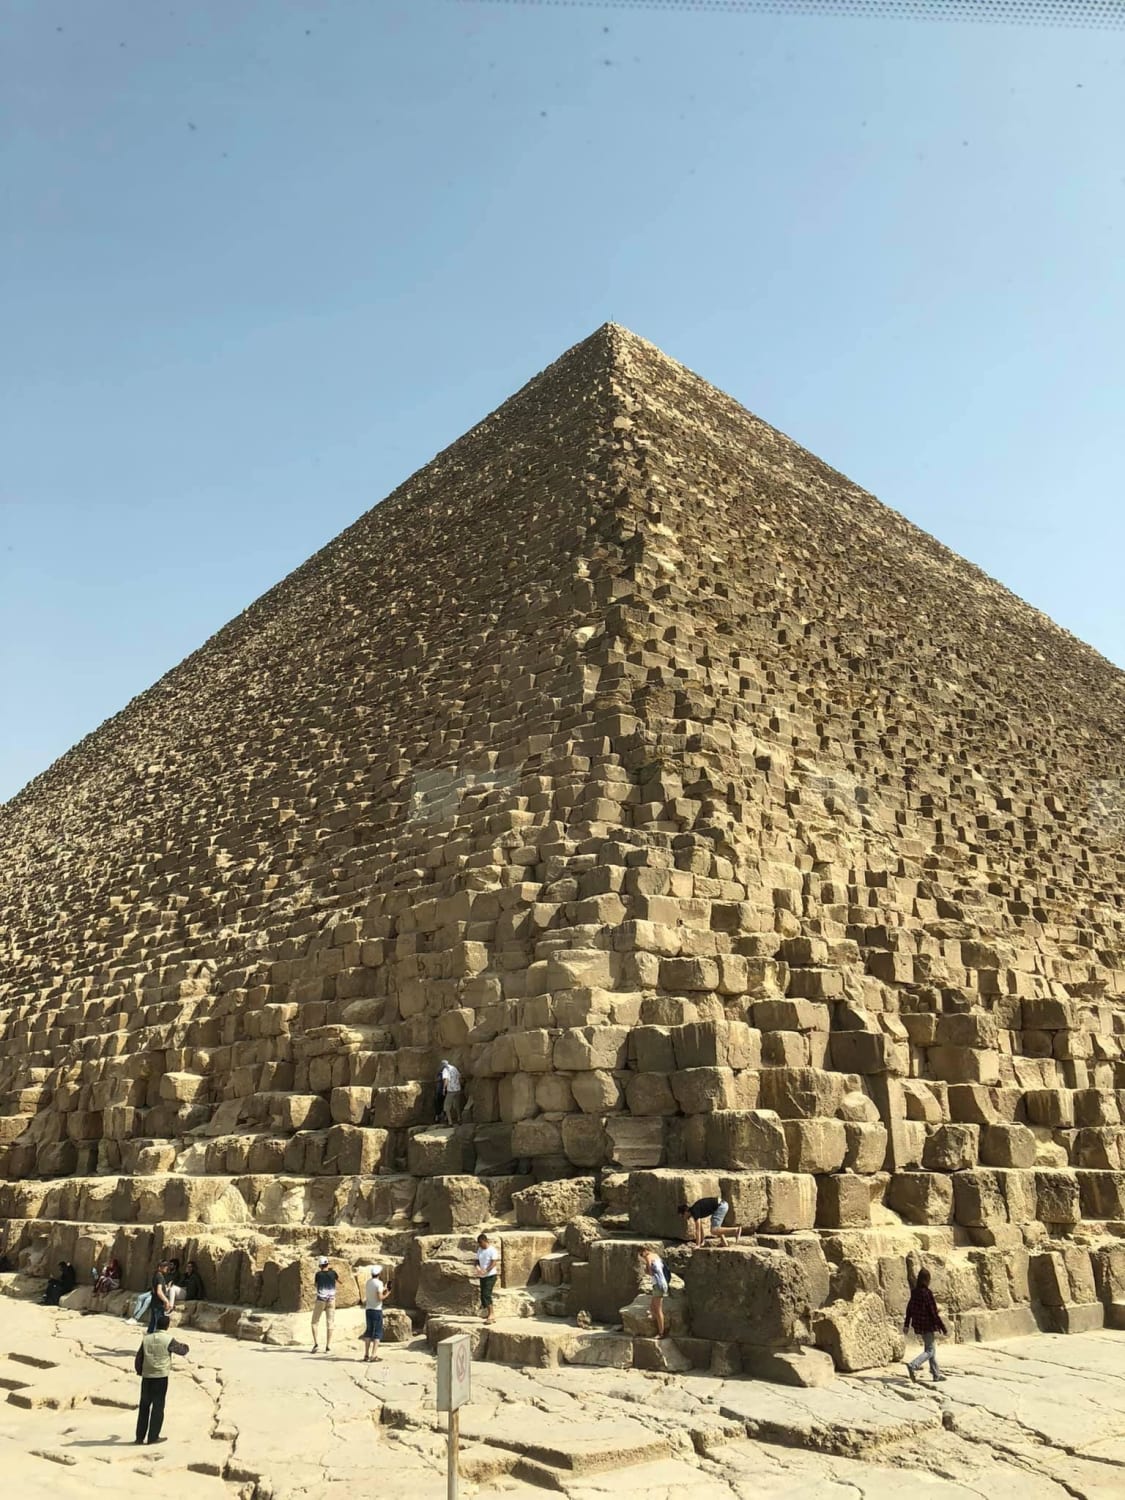 Very Impressive the great Pyramid